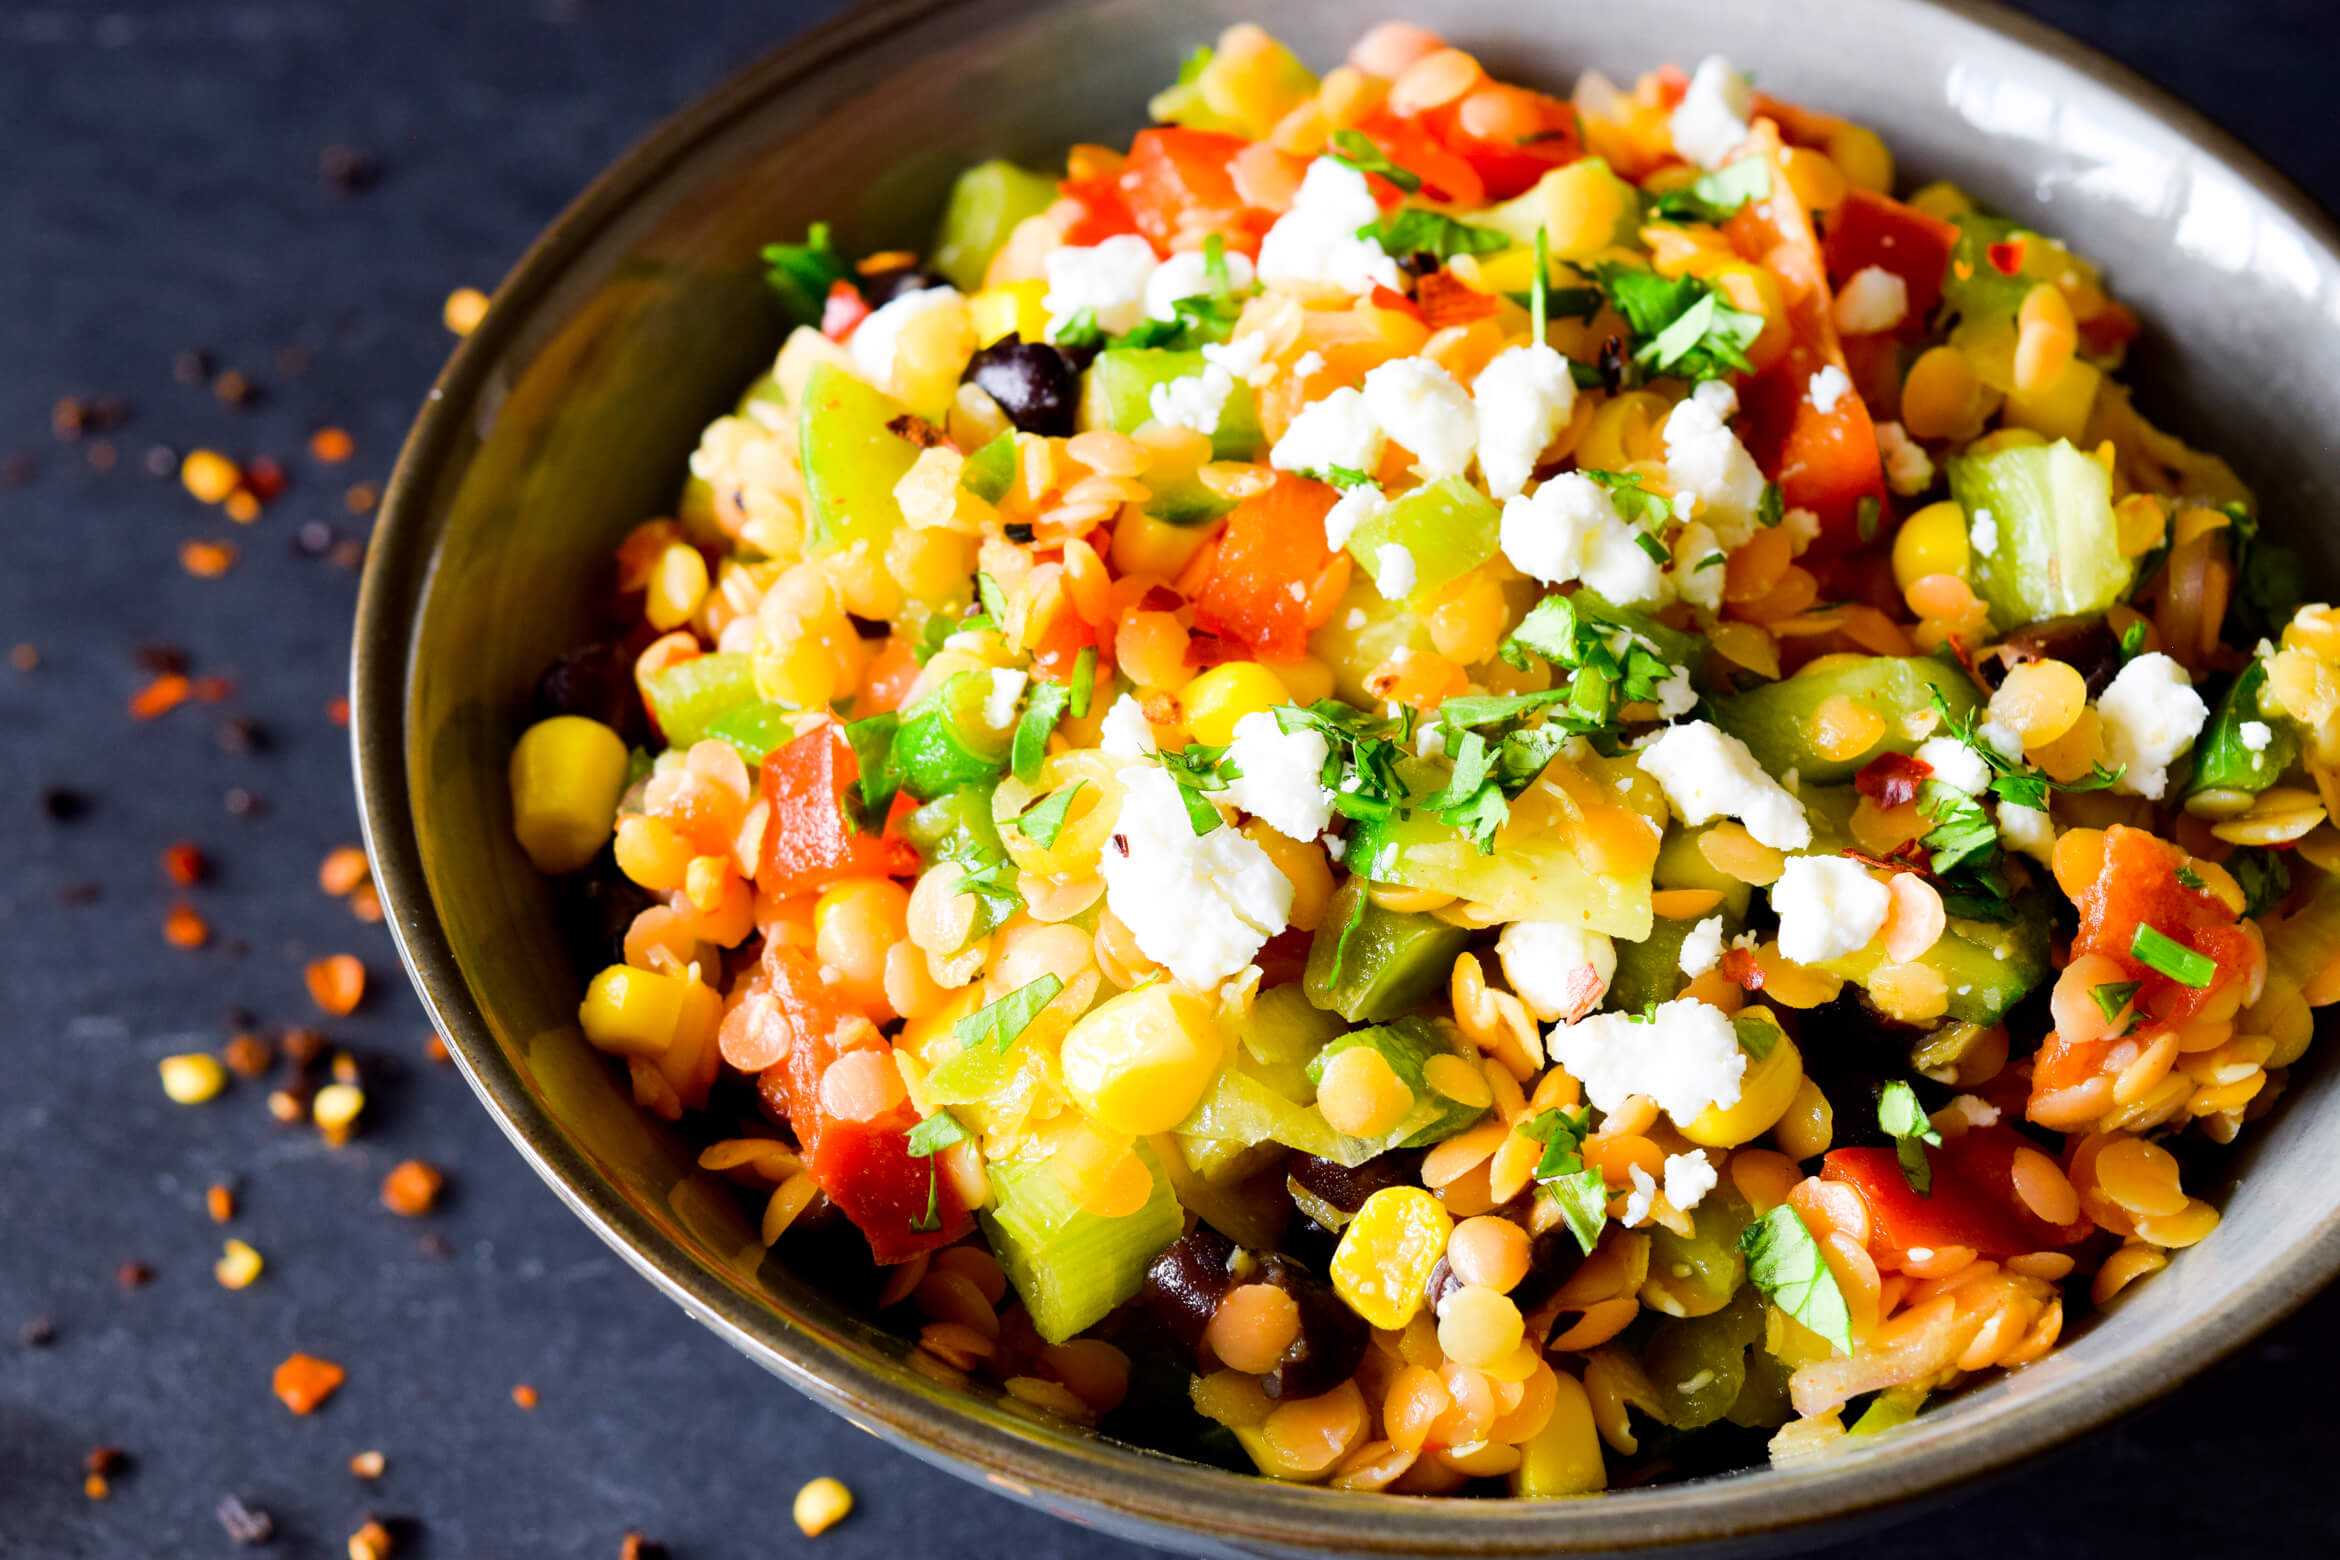 Easy, Delicious Corn & Lentil Salad Recipe 4 The Love Of Family